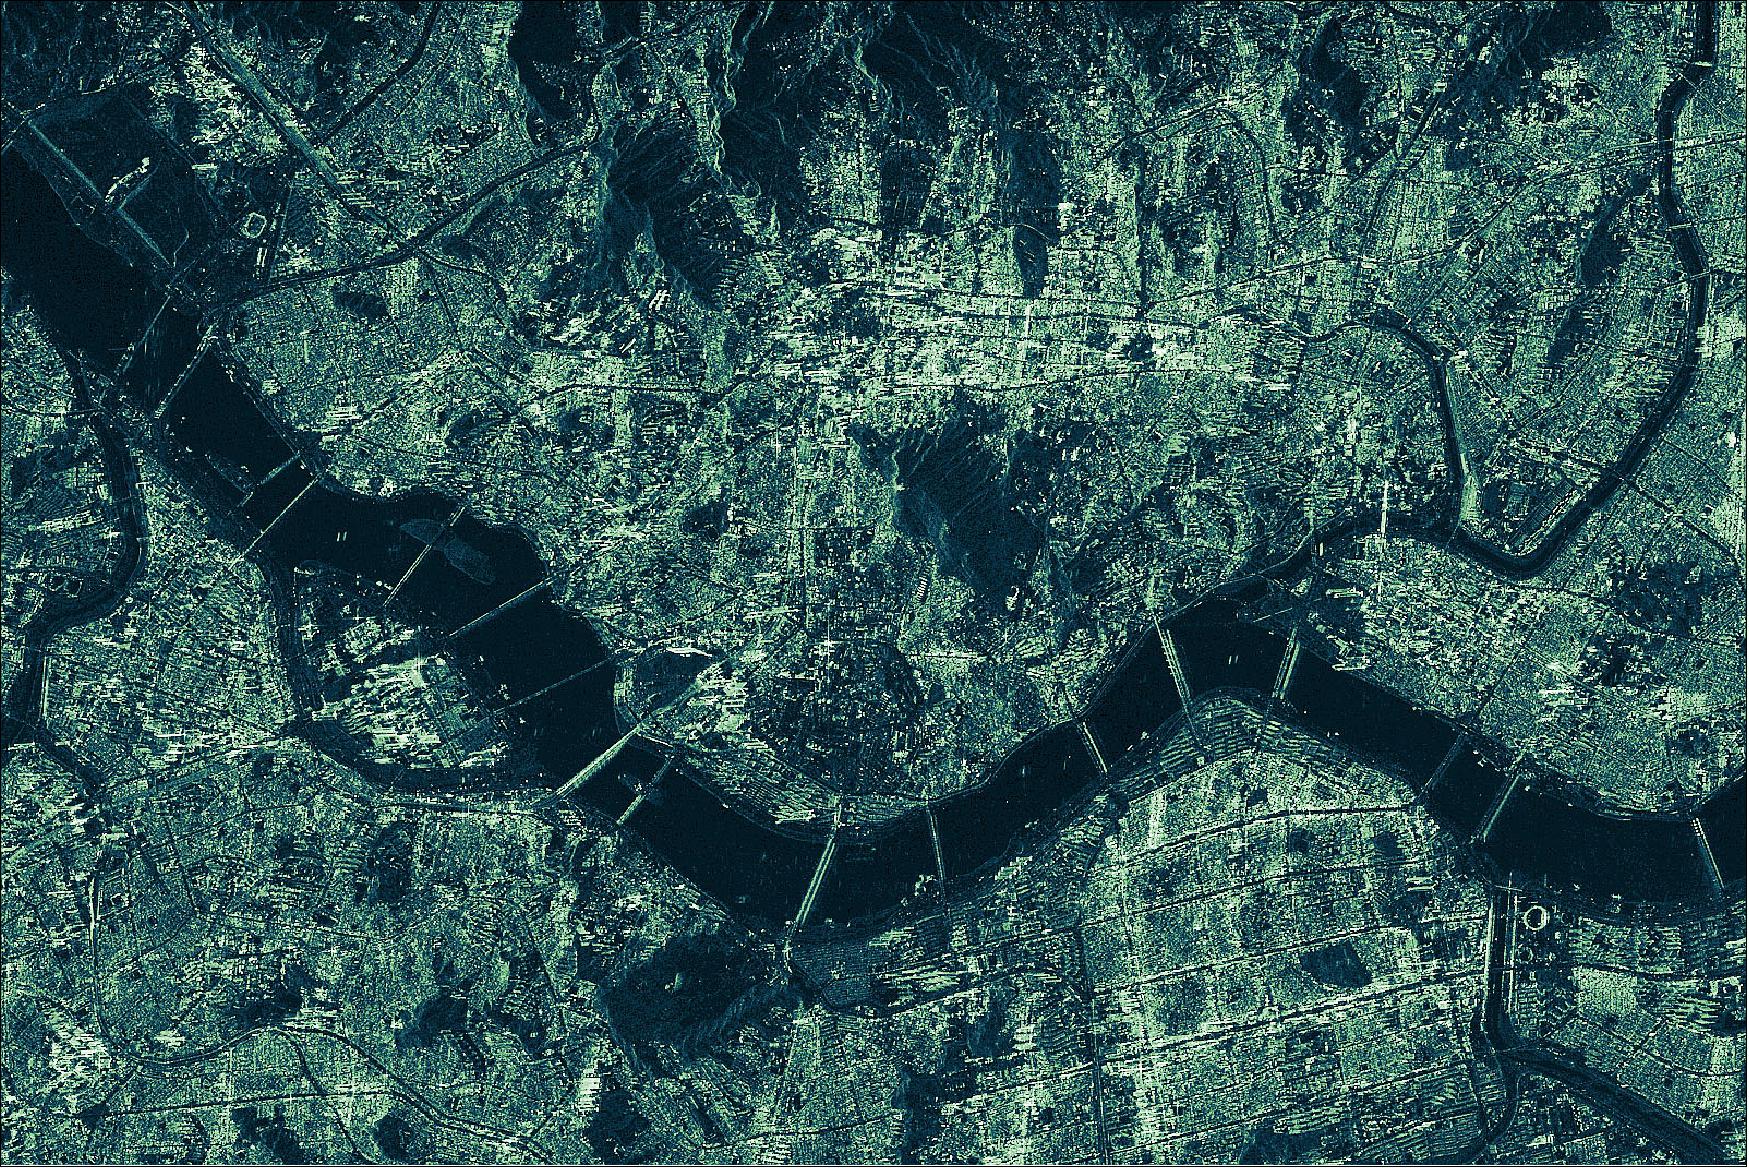 Figure 53: ICEYE-X2 radar satellite image of Seoul, South Korea, acquired in February 2019 (image credit: ICEYE)